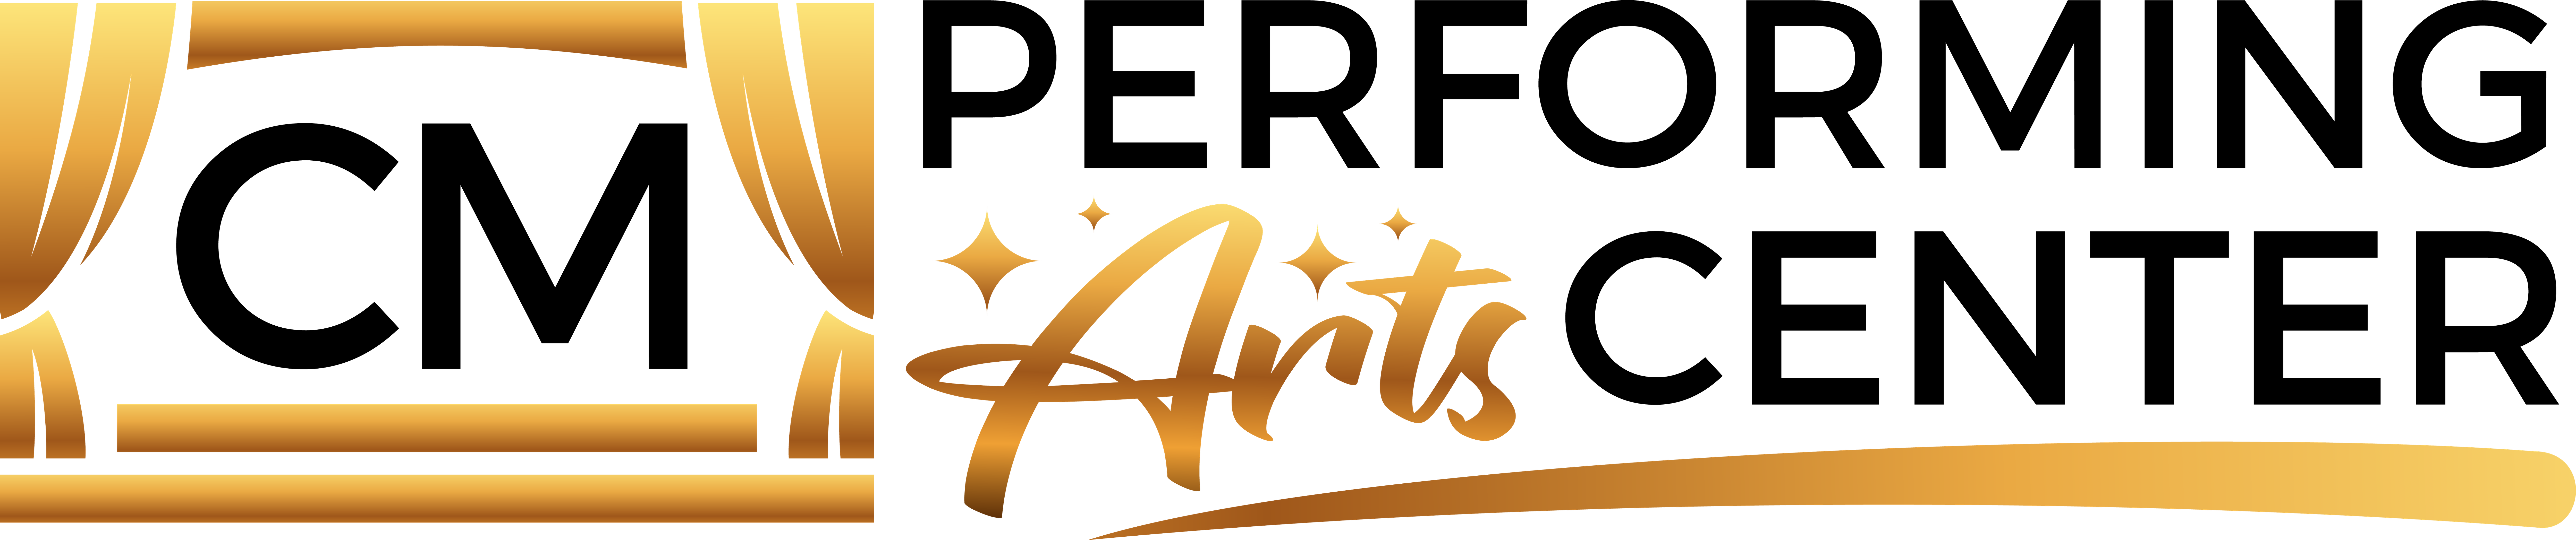 CM Performing Arts Center logo